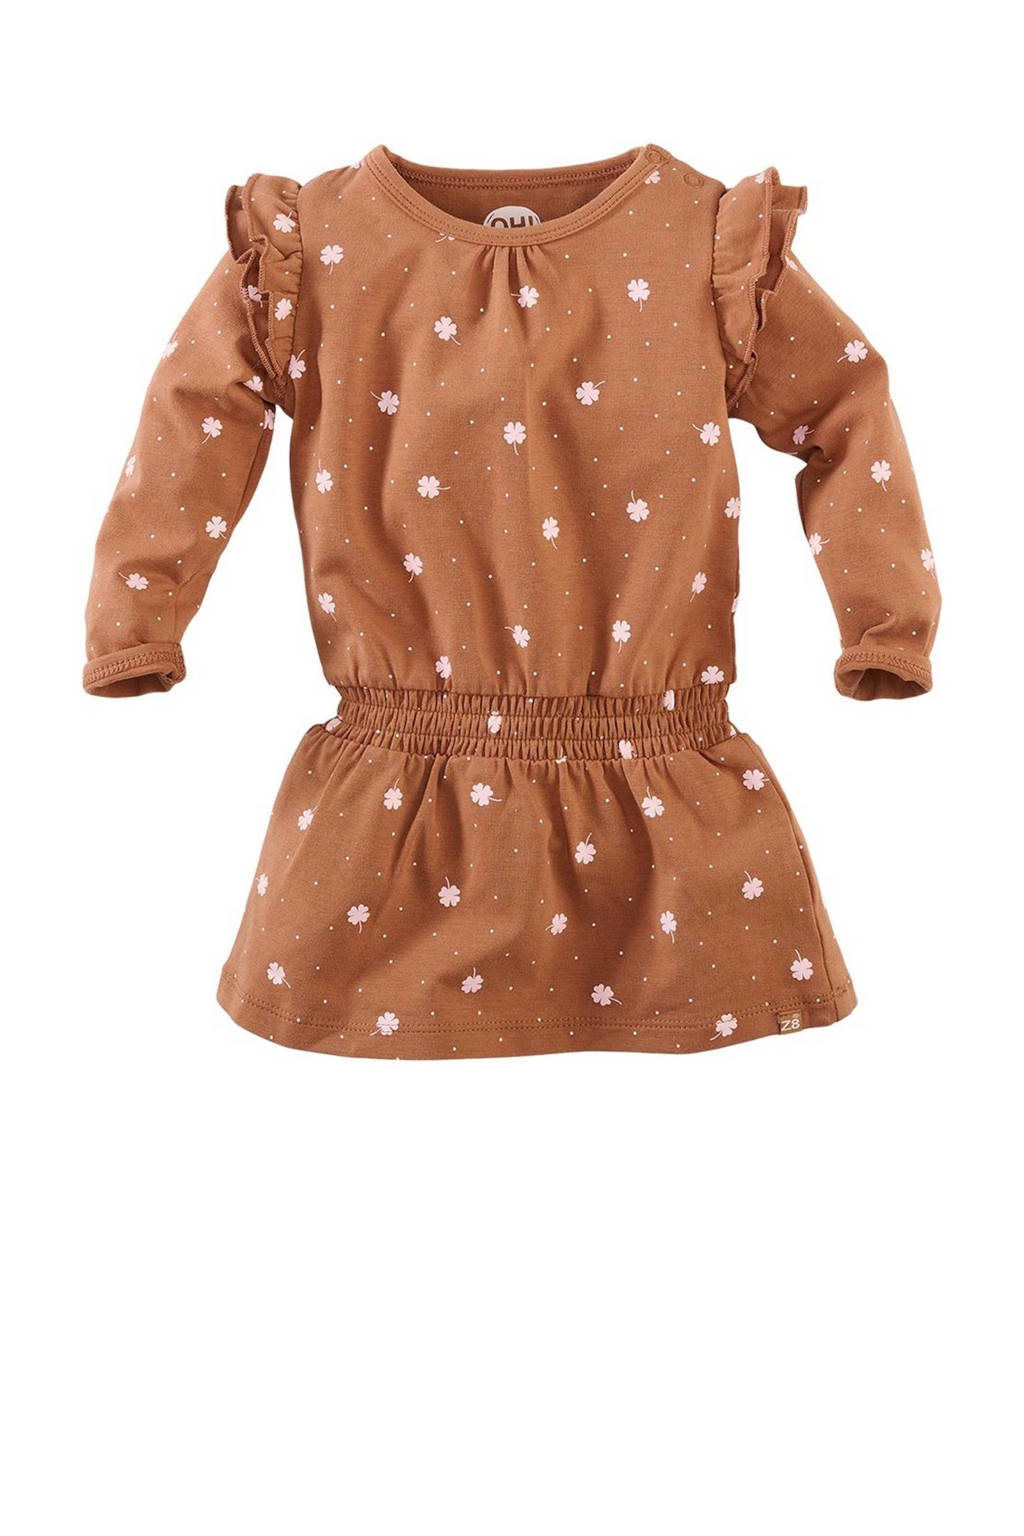 Z8 newborn baby jurk Bibi met all over print en ruches bruin/ecru